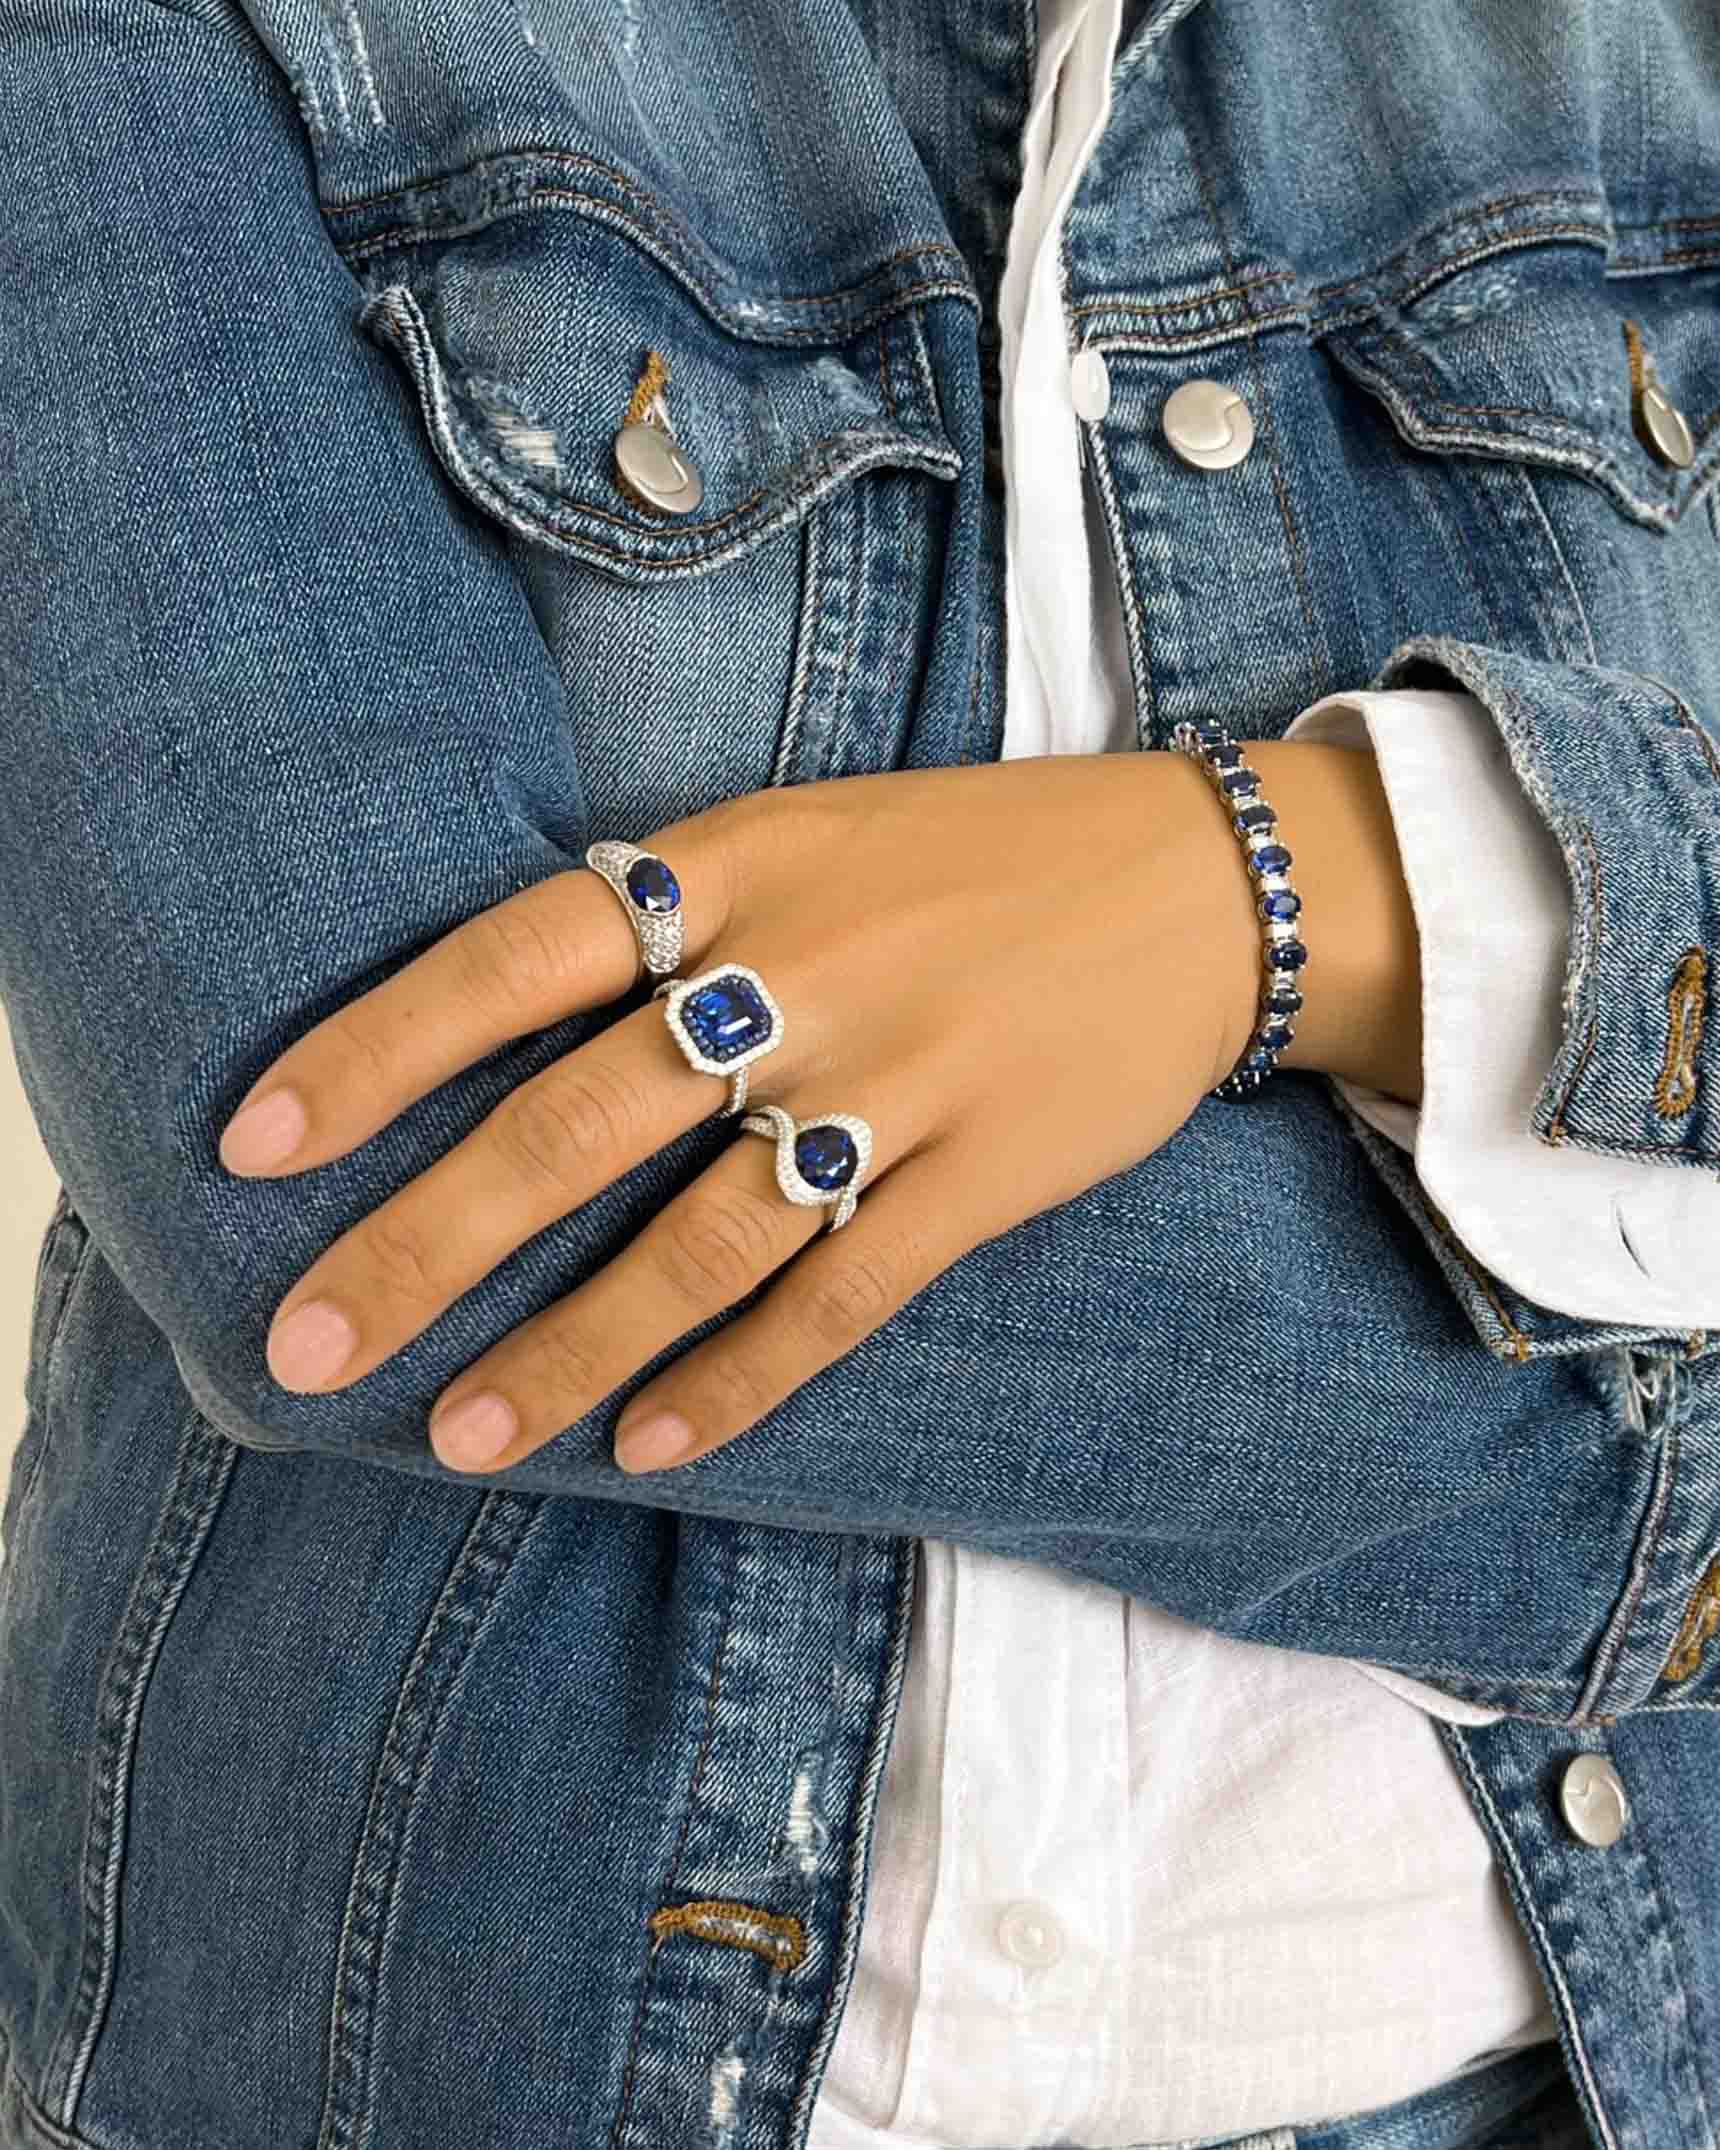 Blue Sapphire and Diamond Bracelet and Rings BCDKK02669 – RMD8U00901 – RCDSA03007 – RMD8U00646